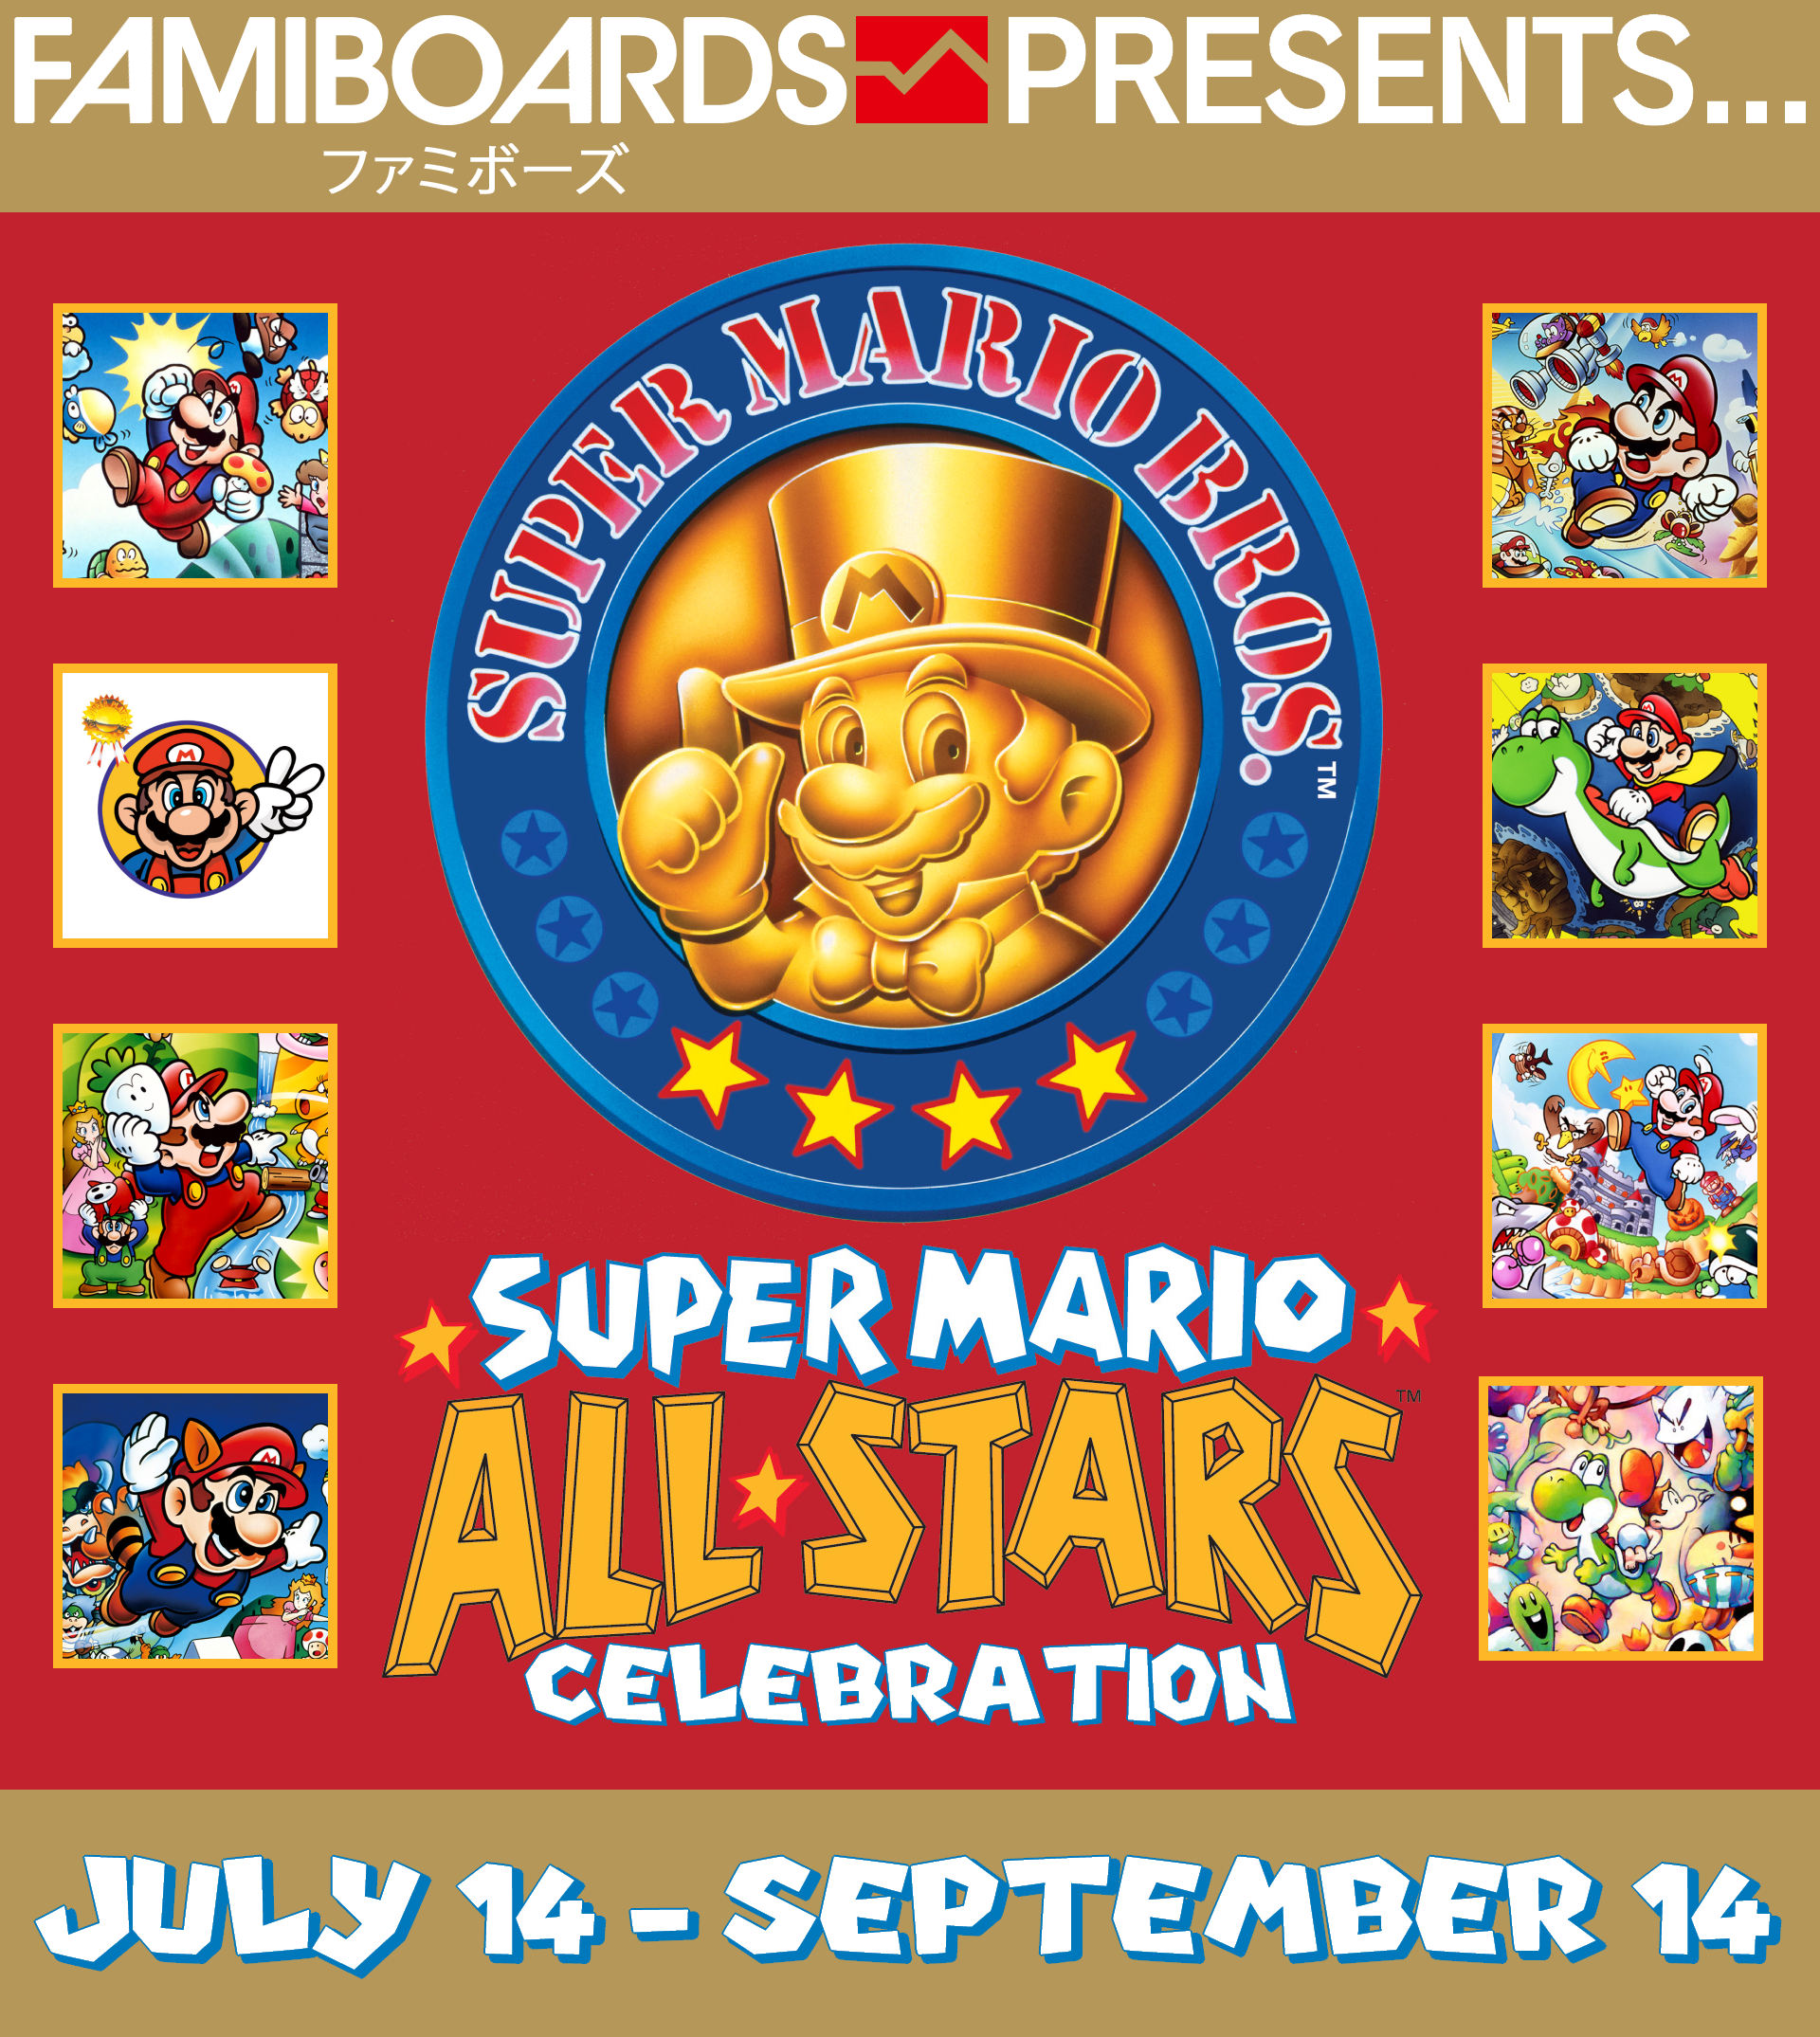 Famiboards Presents: The Super Mario All-Stars Celebration Event | July 14 - September 14